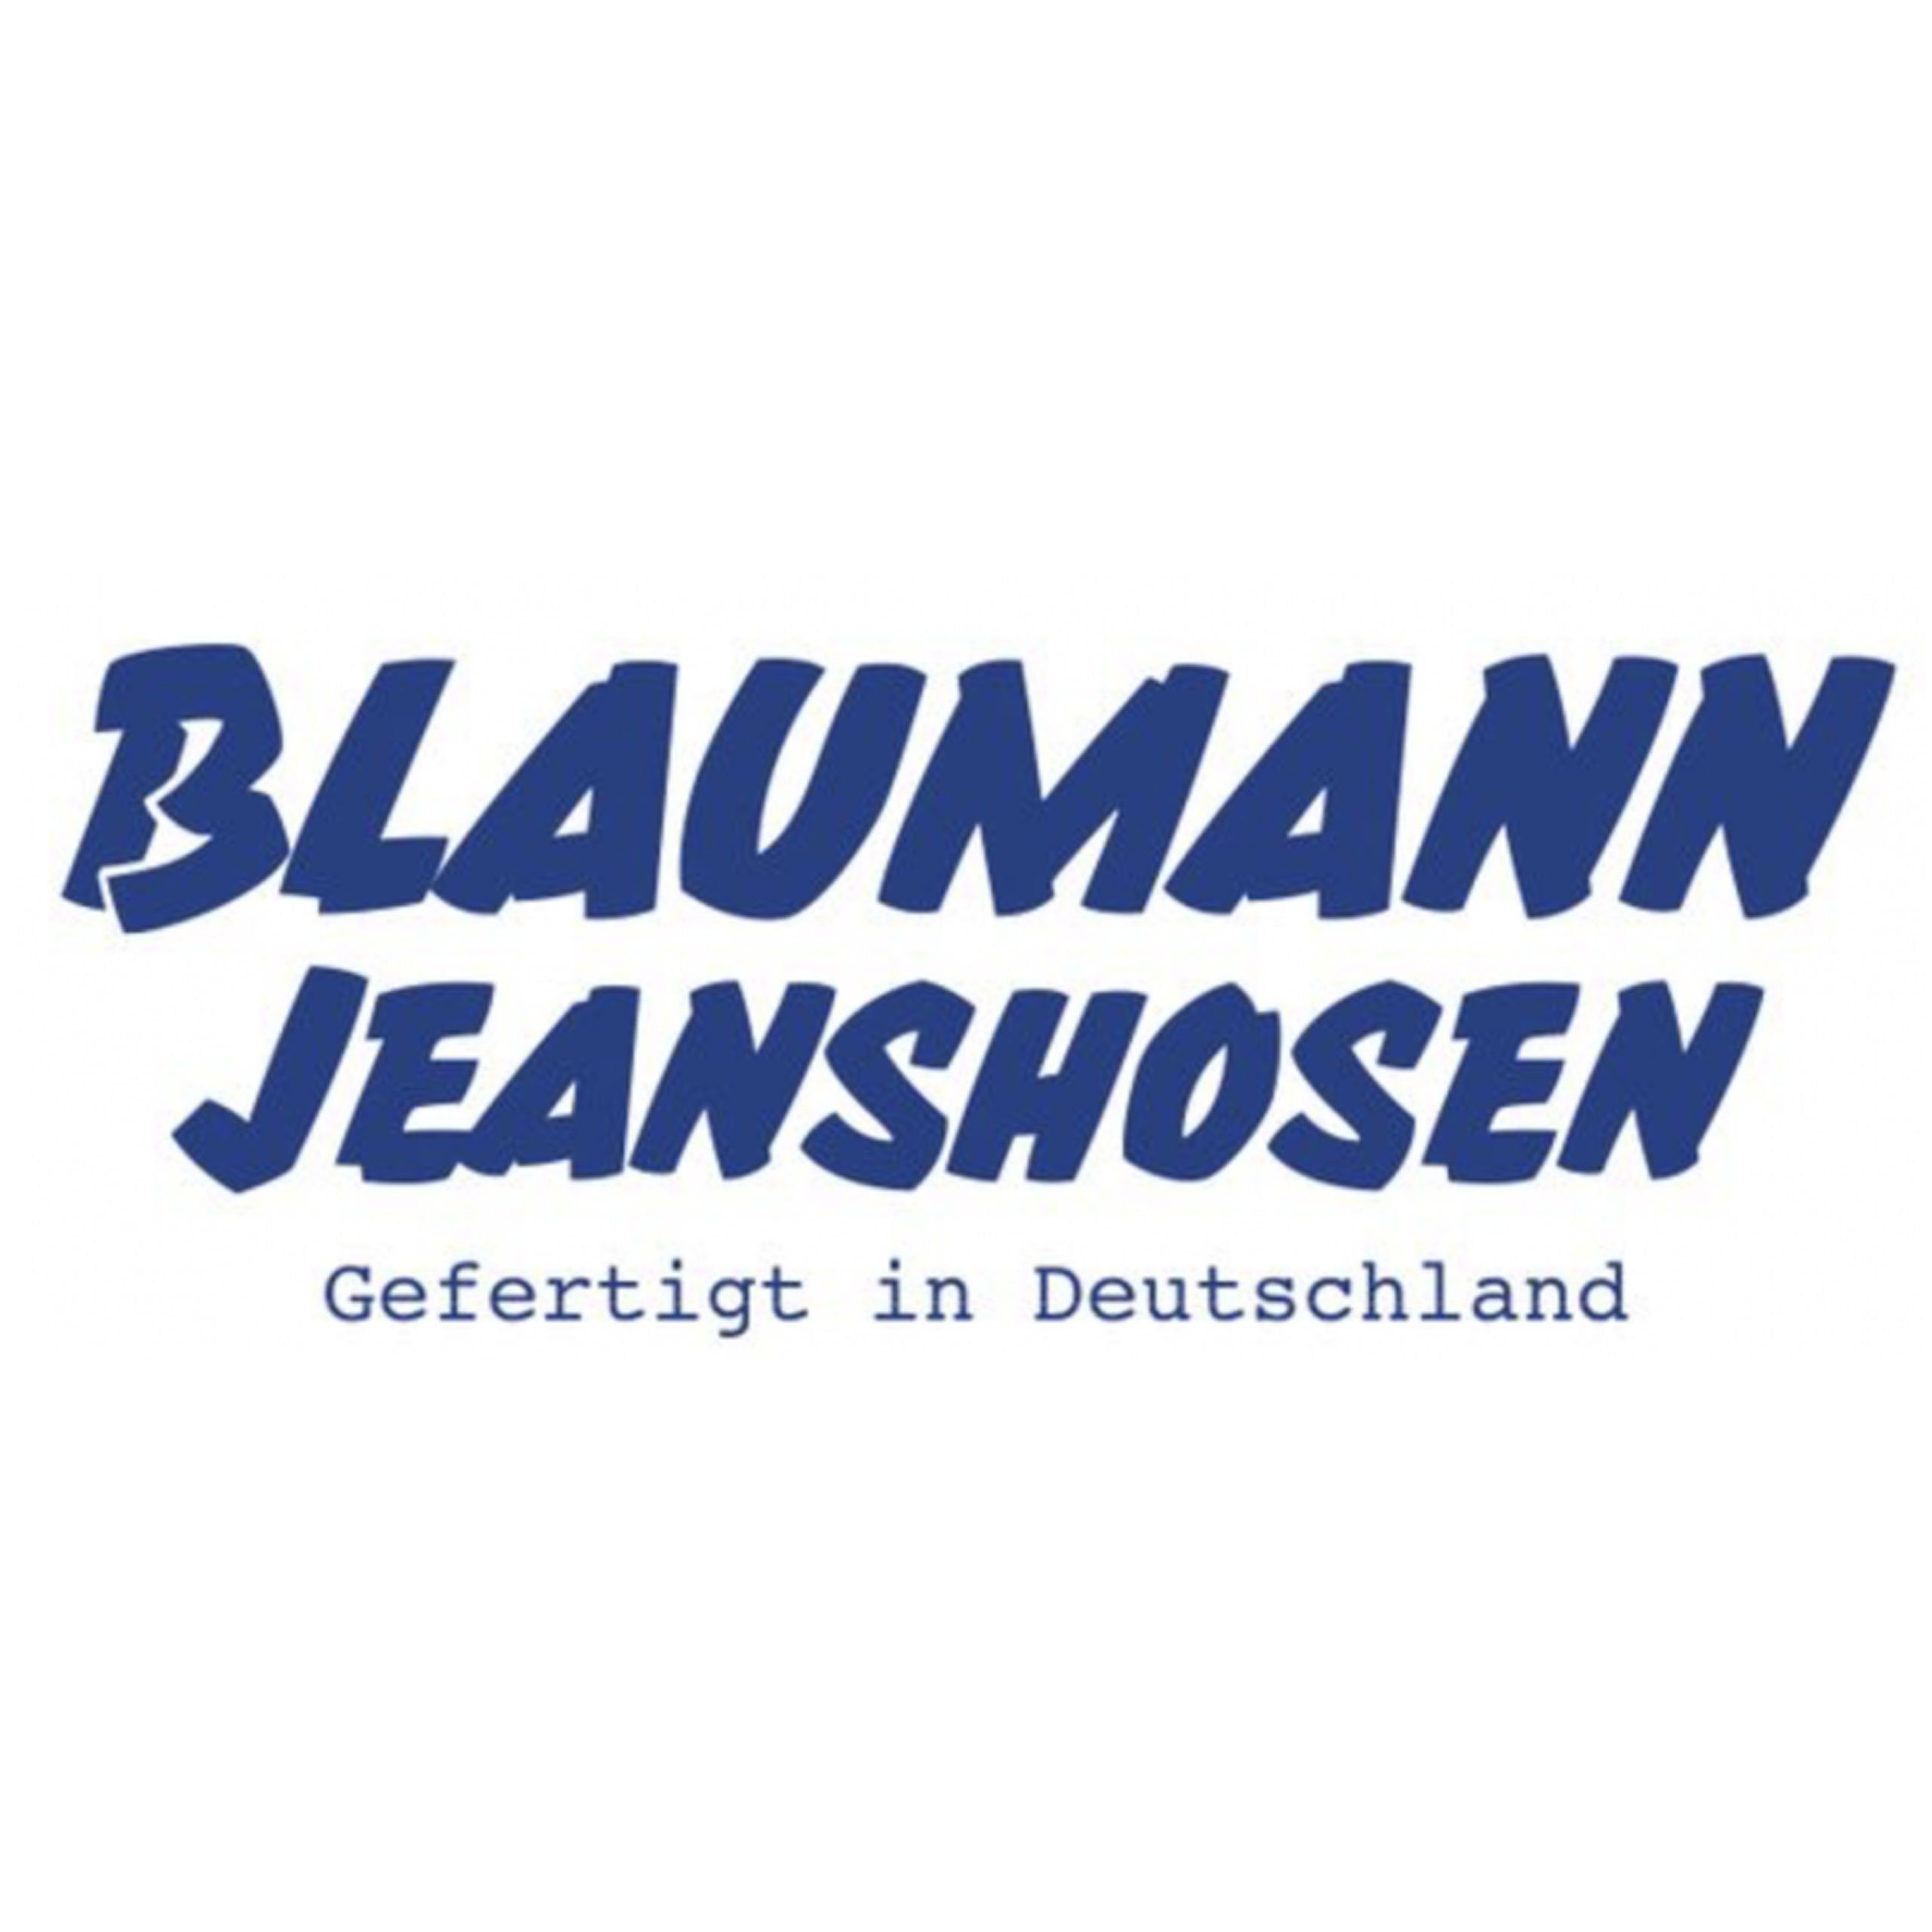 Blaumann Jeanshosen